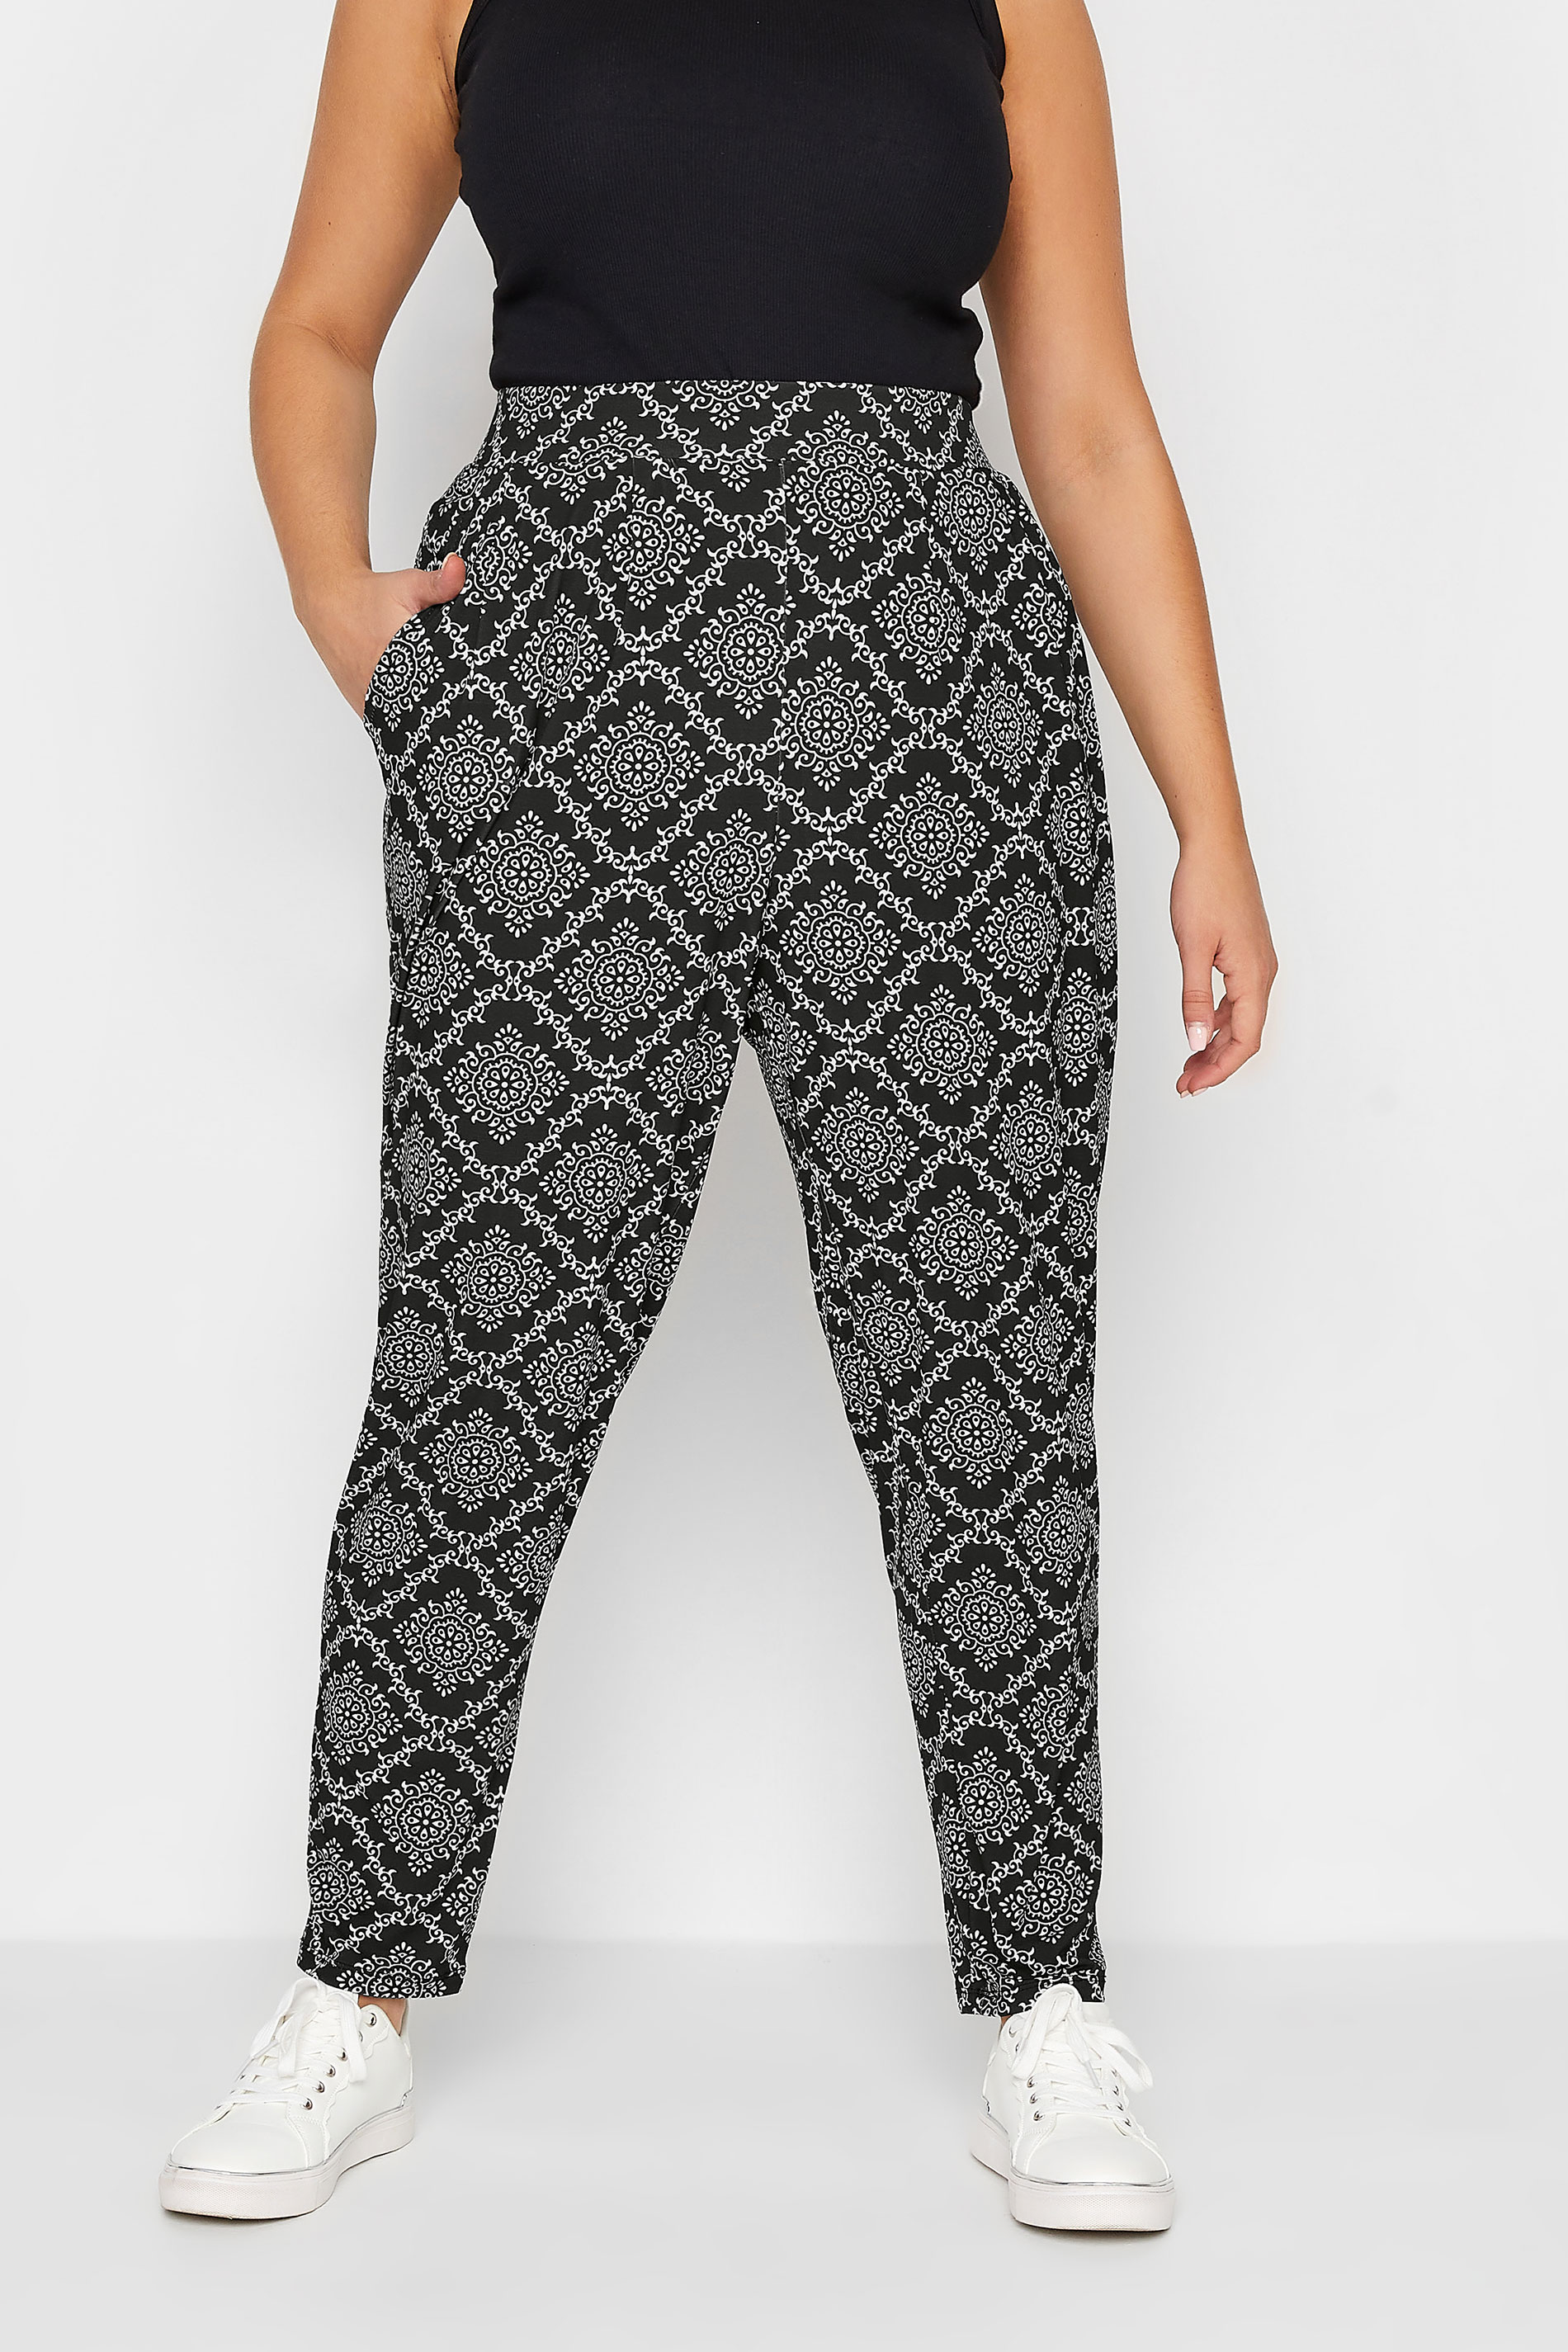 YOURS Plus Size Black Tile Print Double Pleat Harem Trousers | Yours Clothing 1